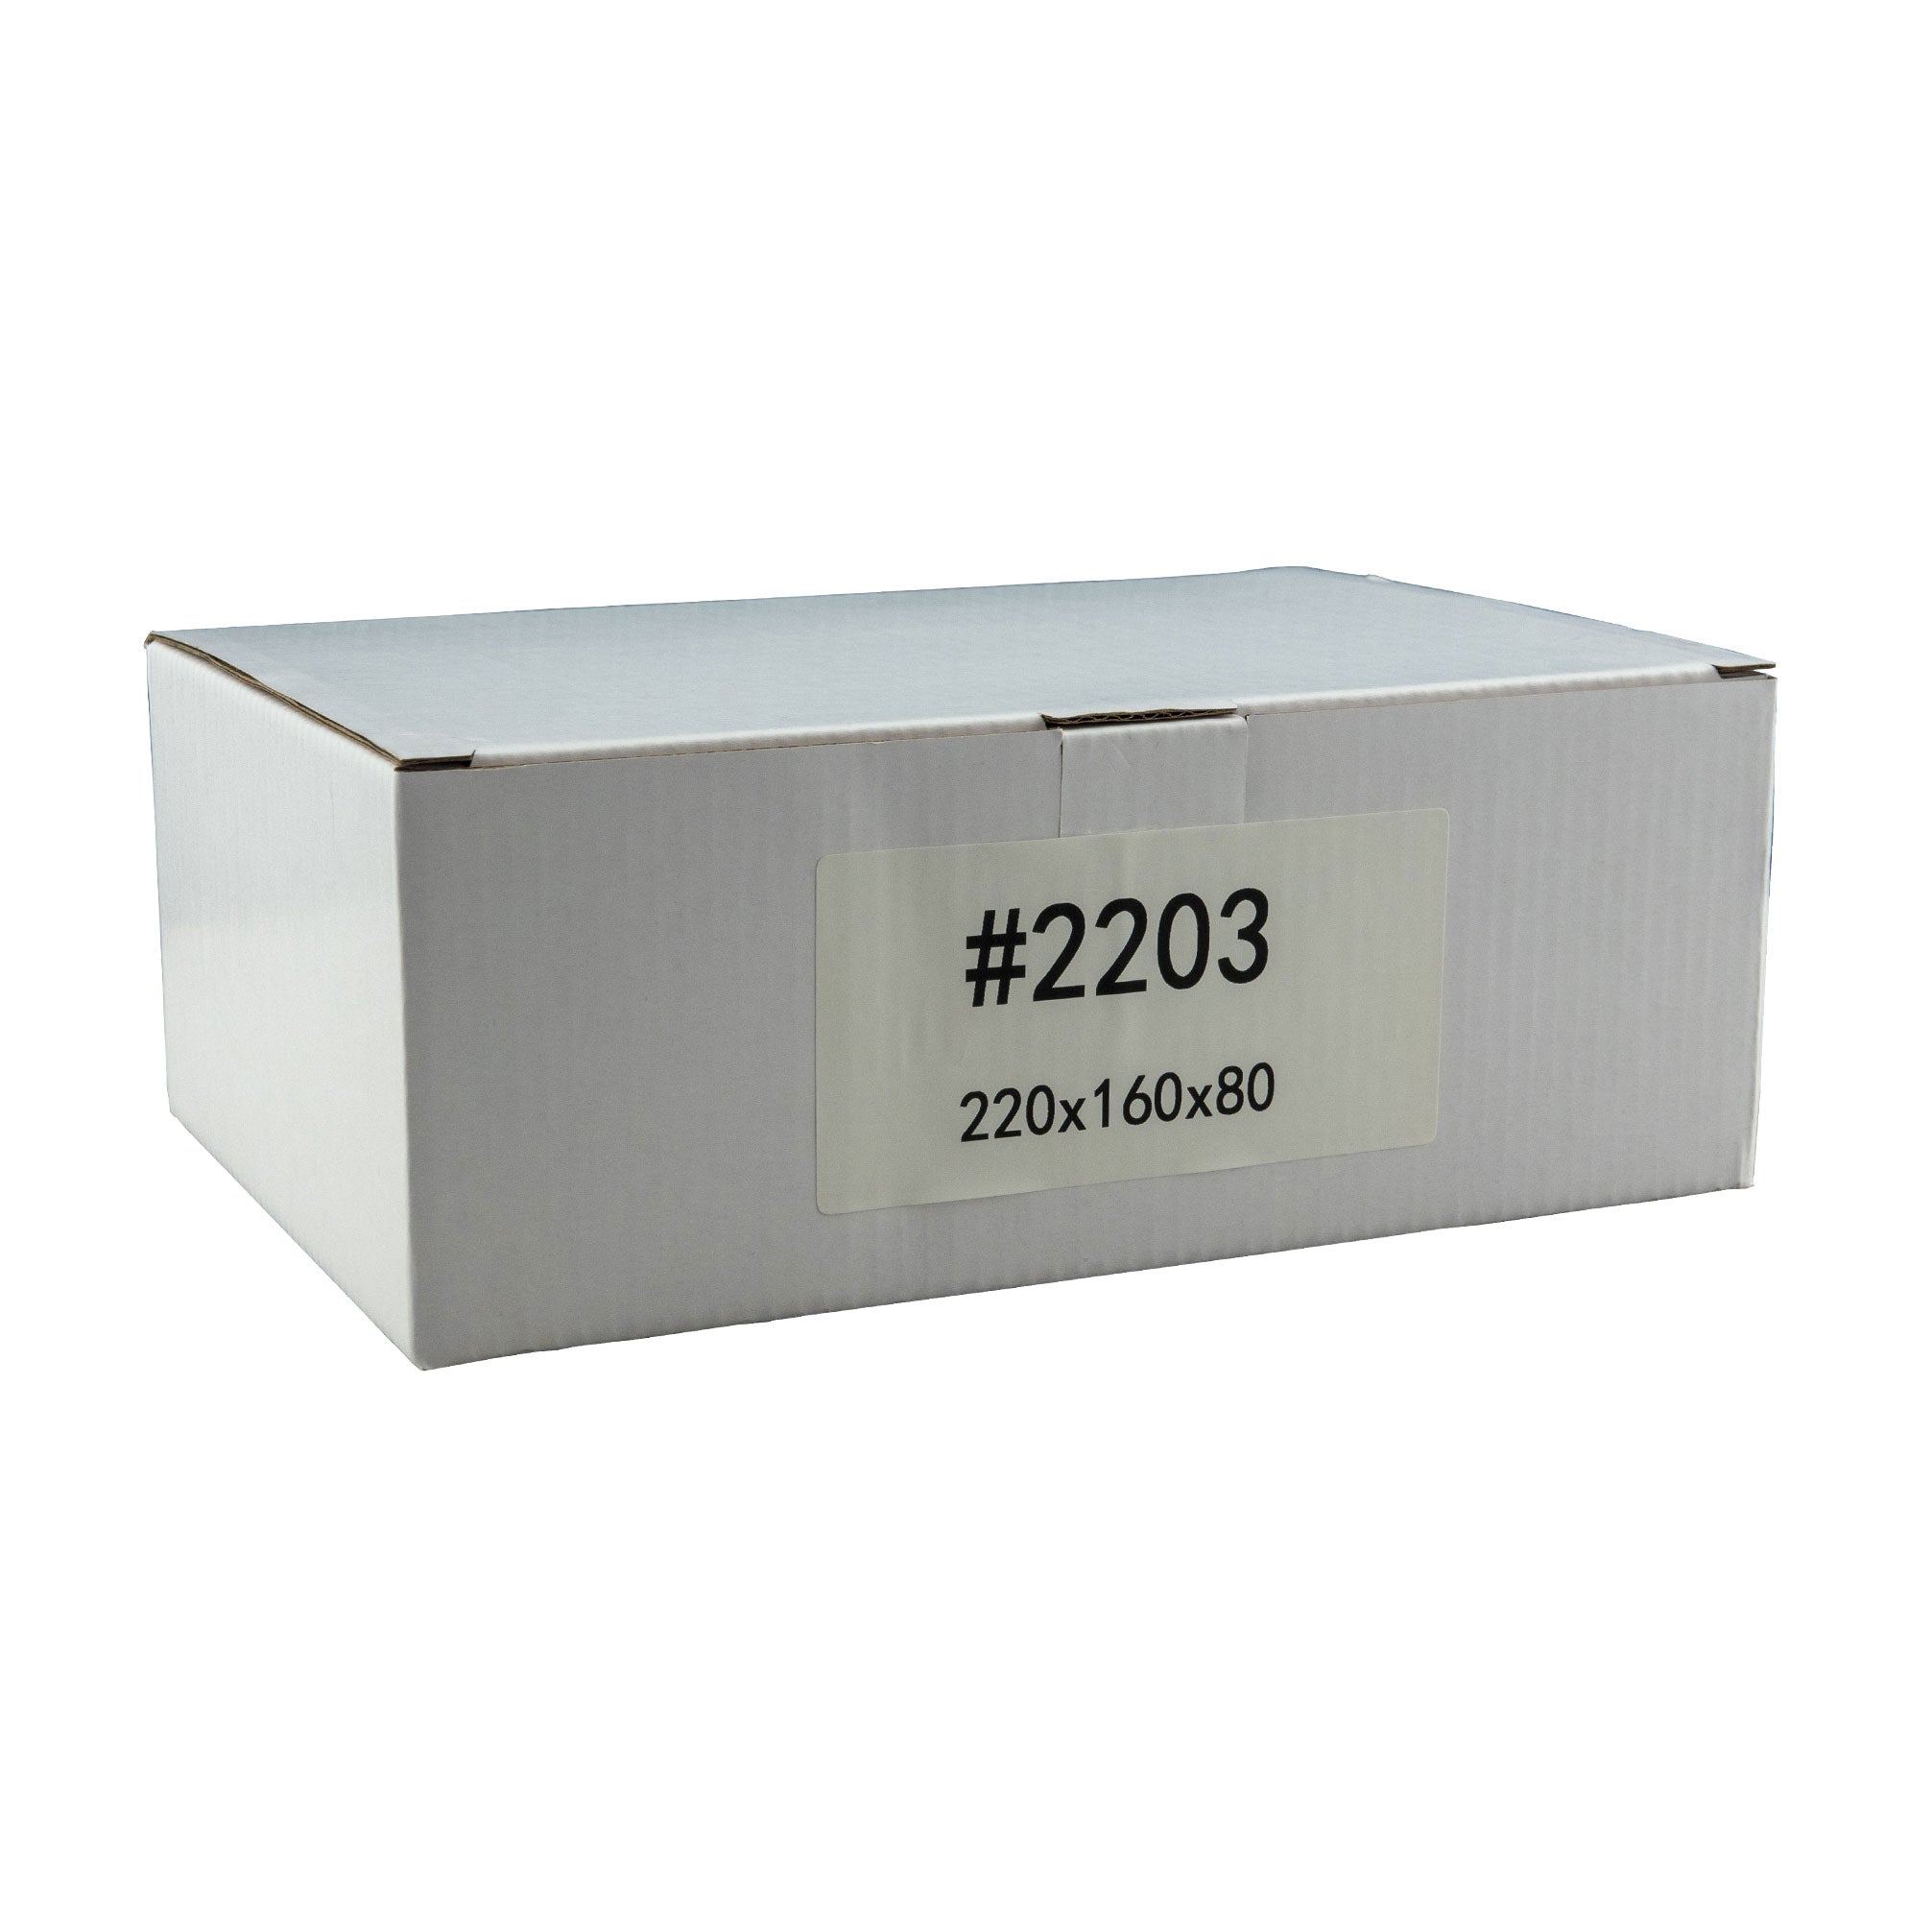 220mm x 160mm x 80mm White Carton Cardboard Shipping Box (#2203)